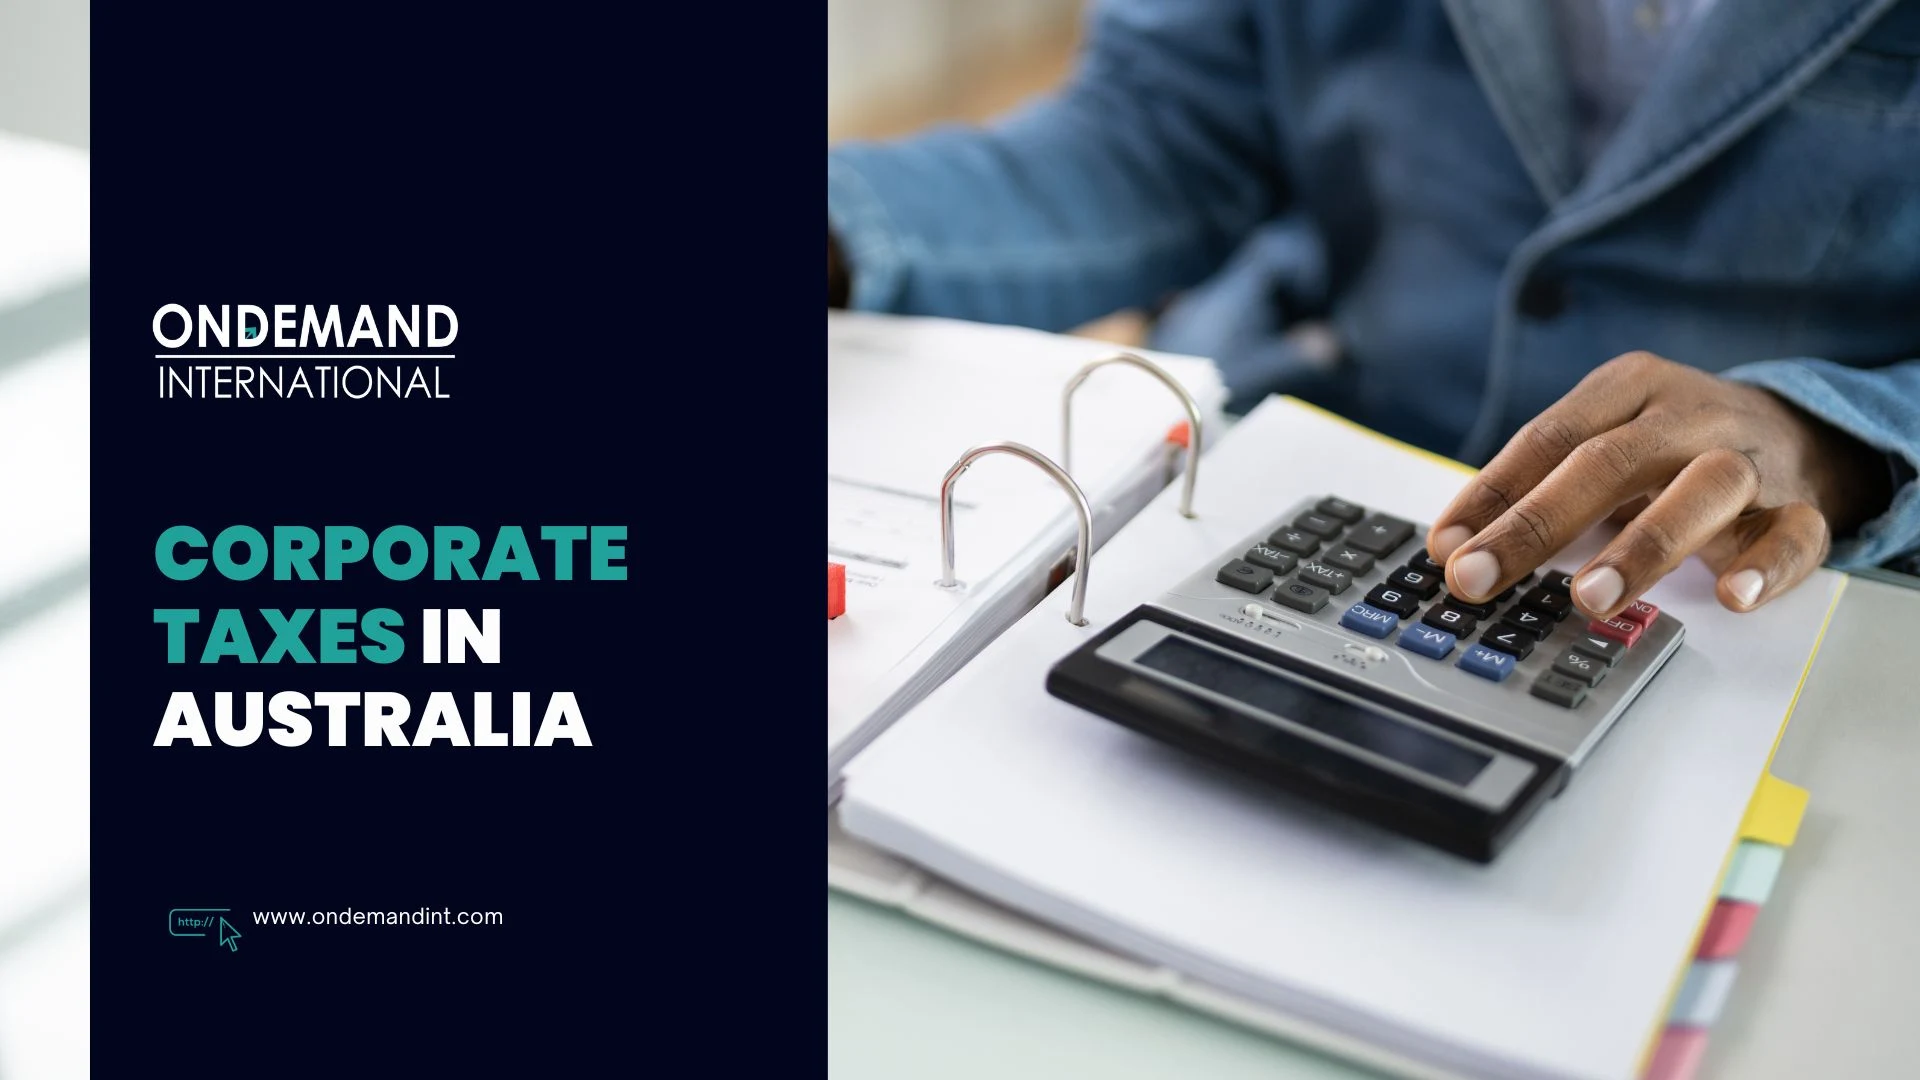 Corporate taxes in Australia